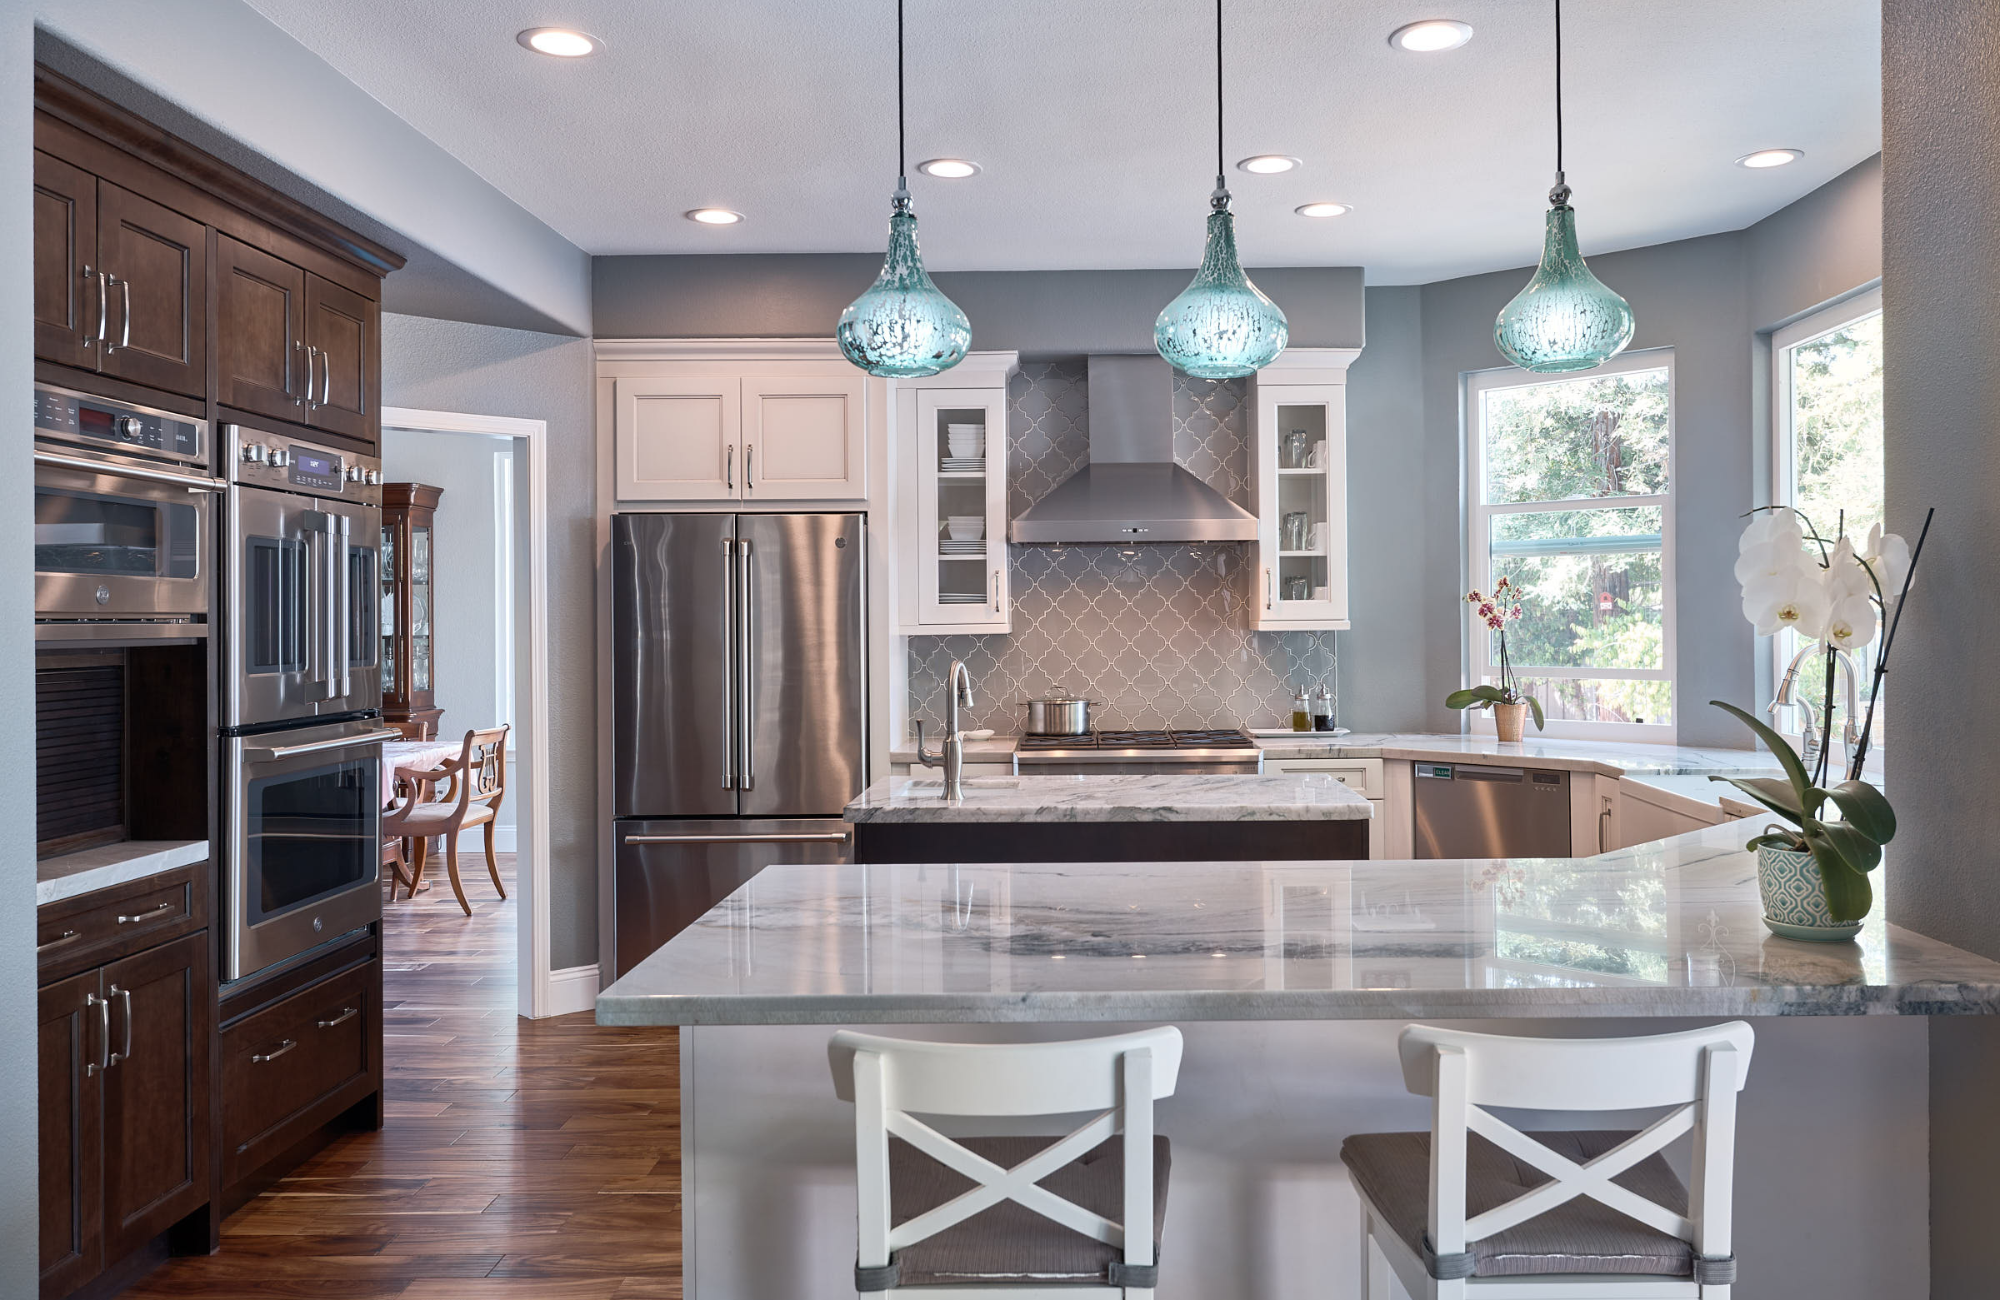 raashi-design-berkeley-ca-color-and-light-to-create-designer-looking-home-transitional-modern-kitchen-interior-design